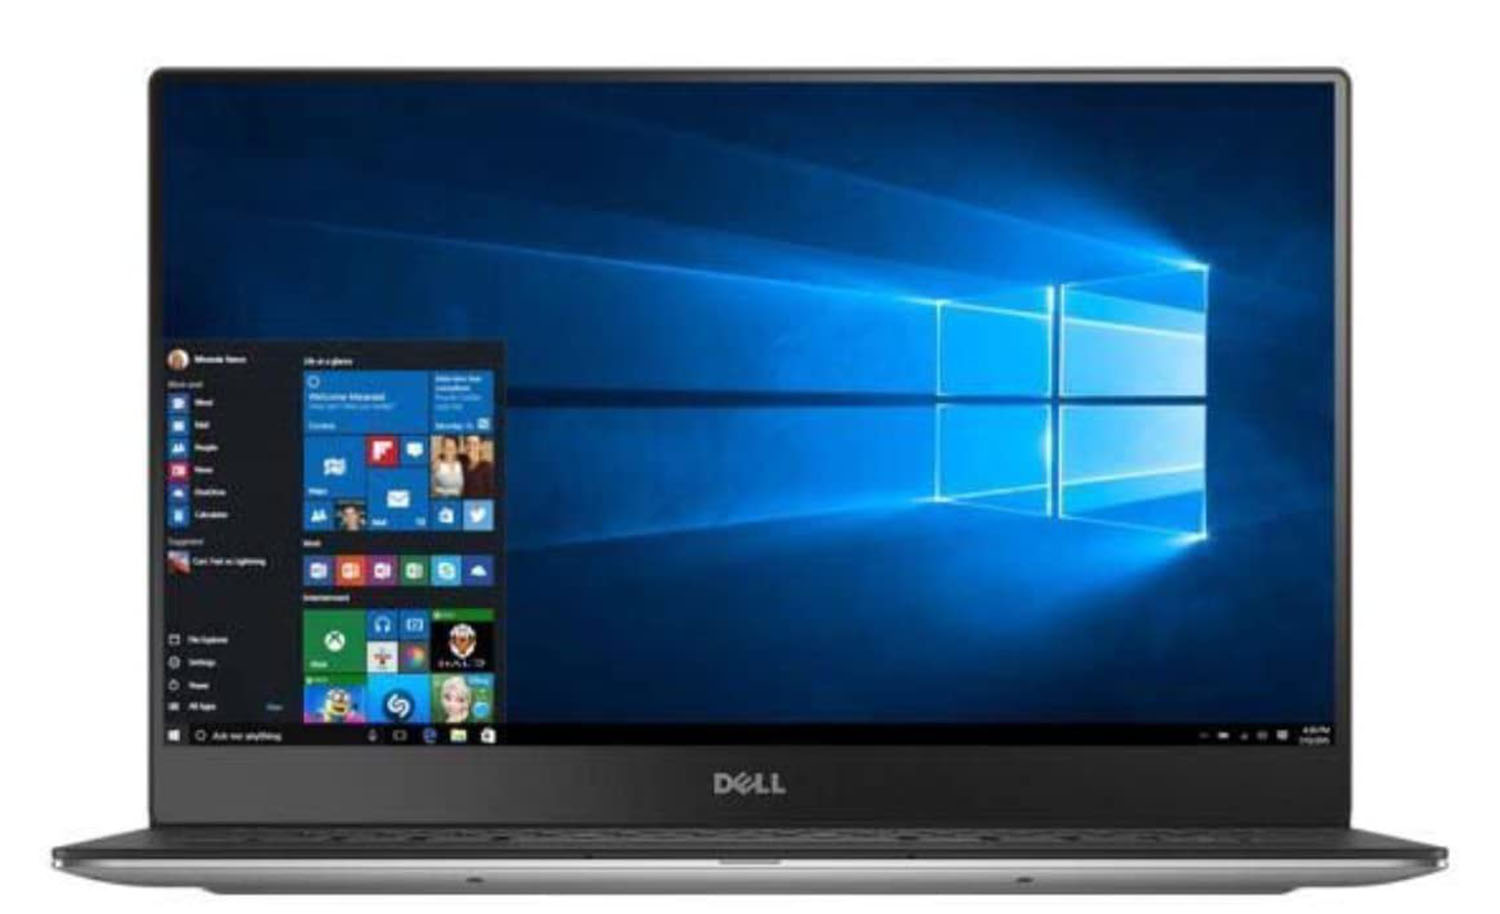 Dell XPS 13 9360 Intel Core i7 7th Gen 8GB RAM 256GB SSD Touchscreen Windows 10 Pro